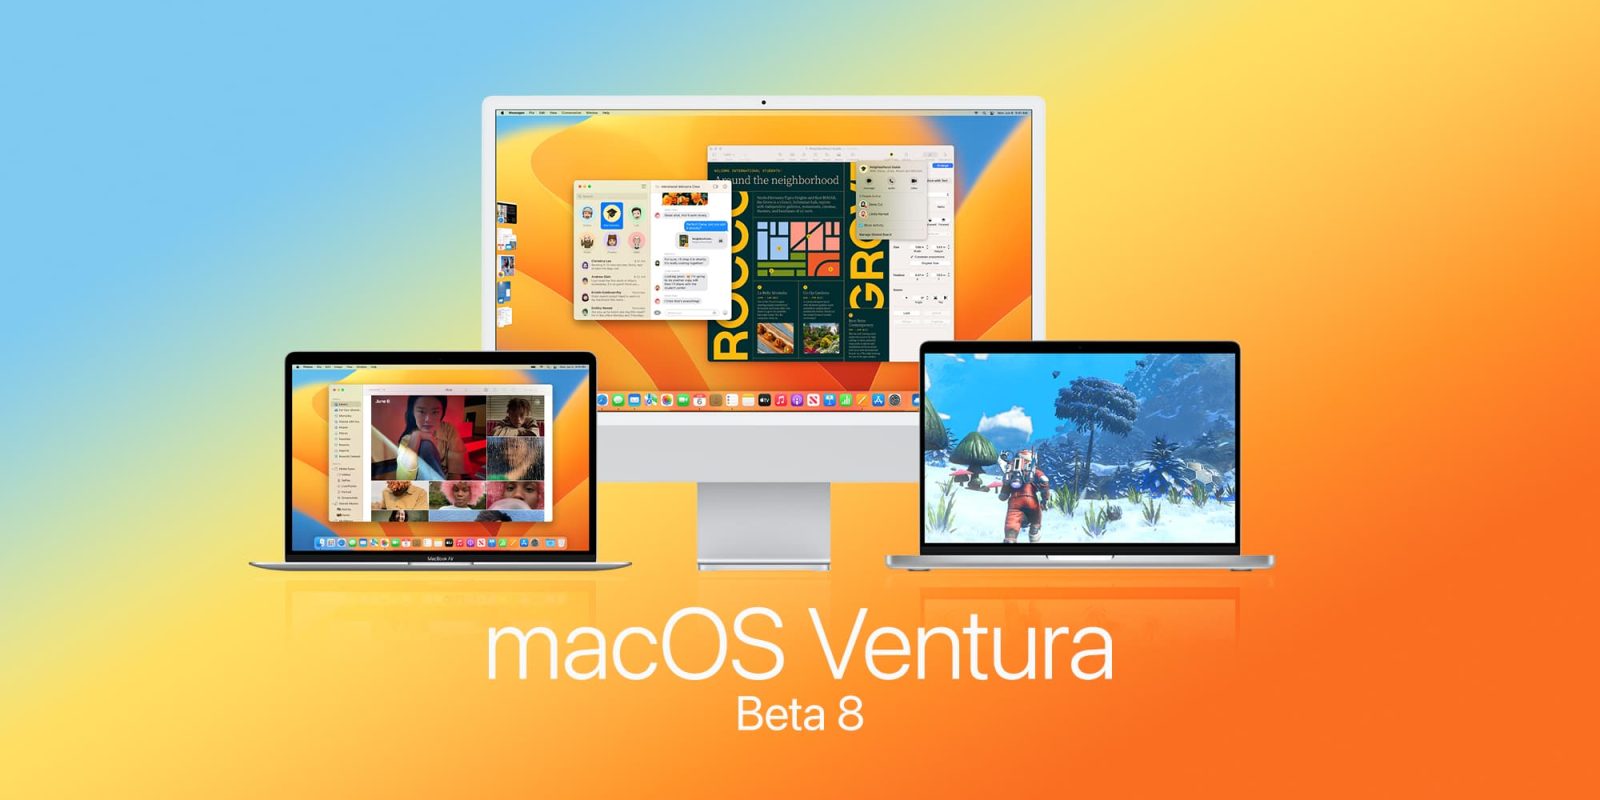 macOS Ventura beta 8